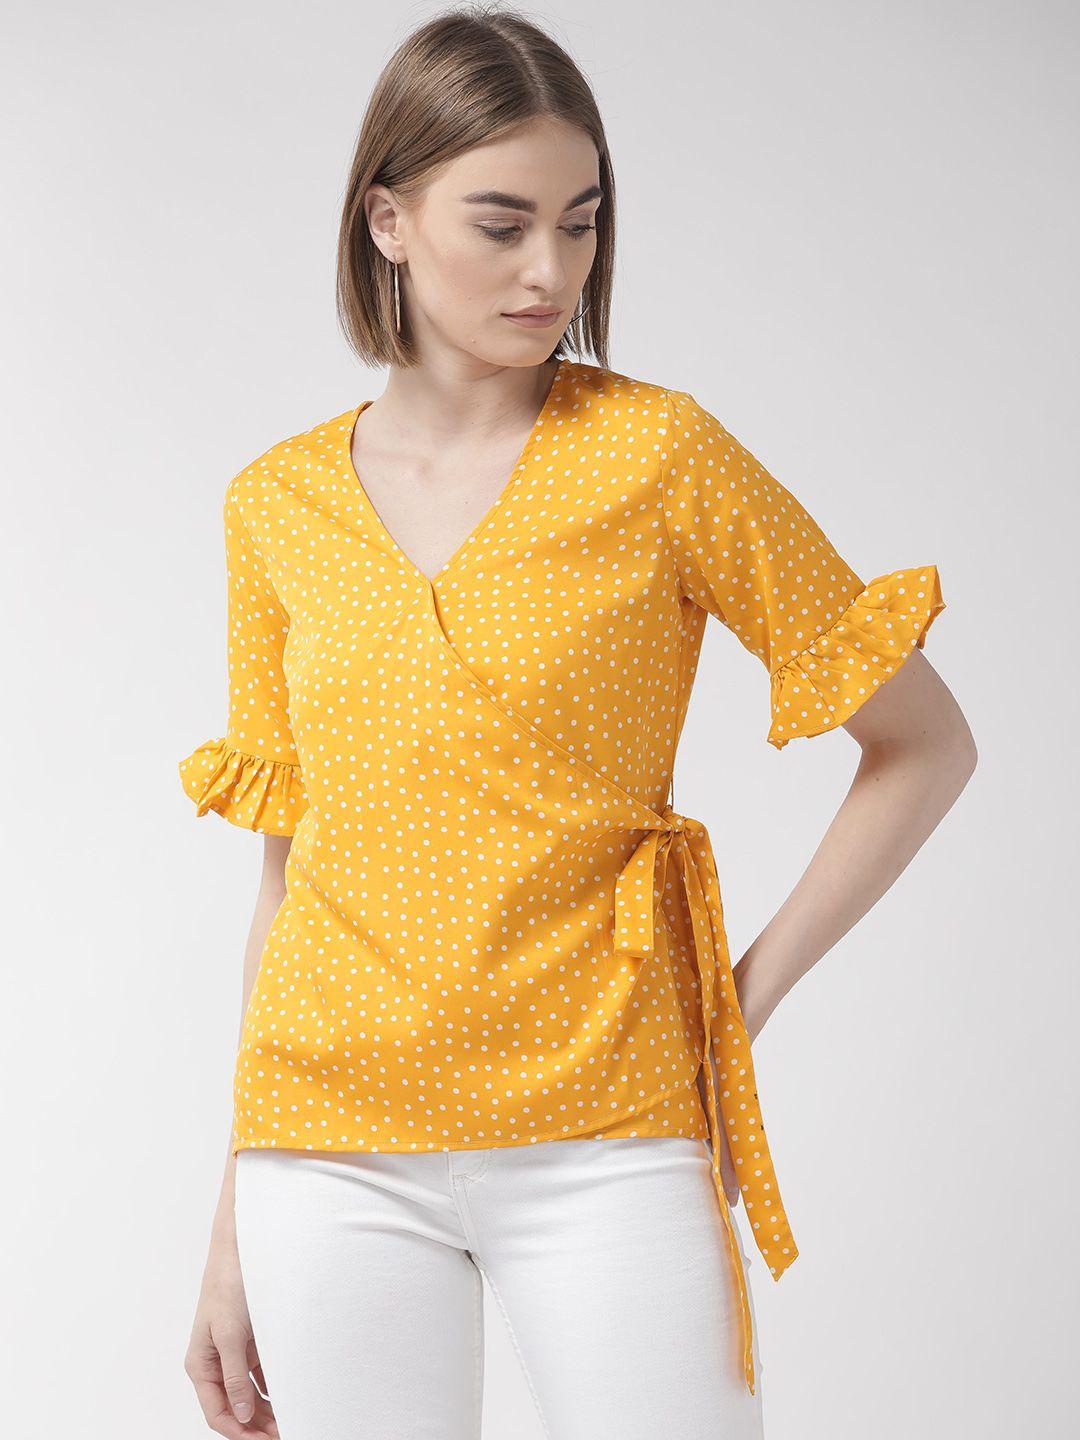 style-quotient-women-yellow-&-white-polka-dot-printed-wrap-top